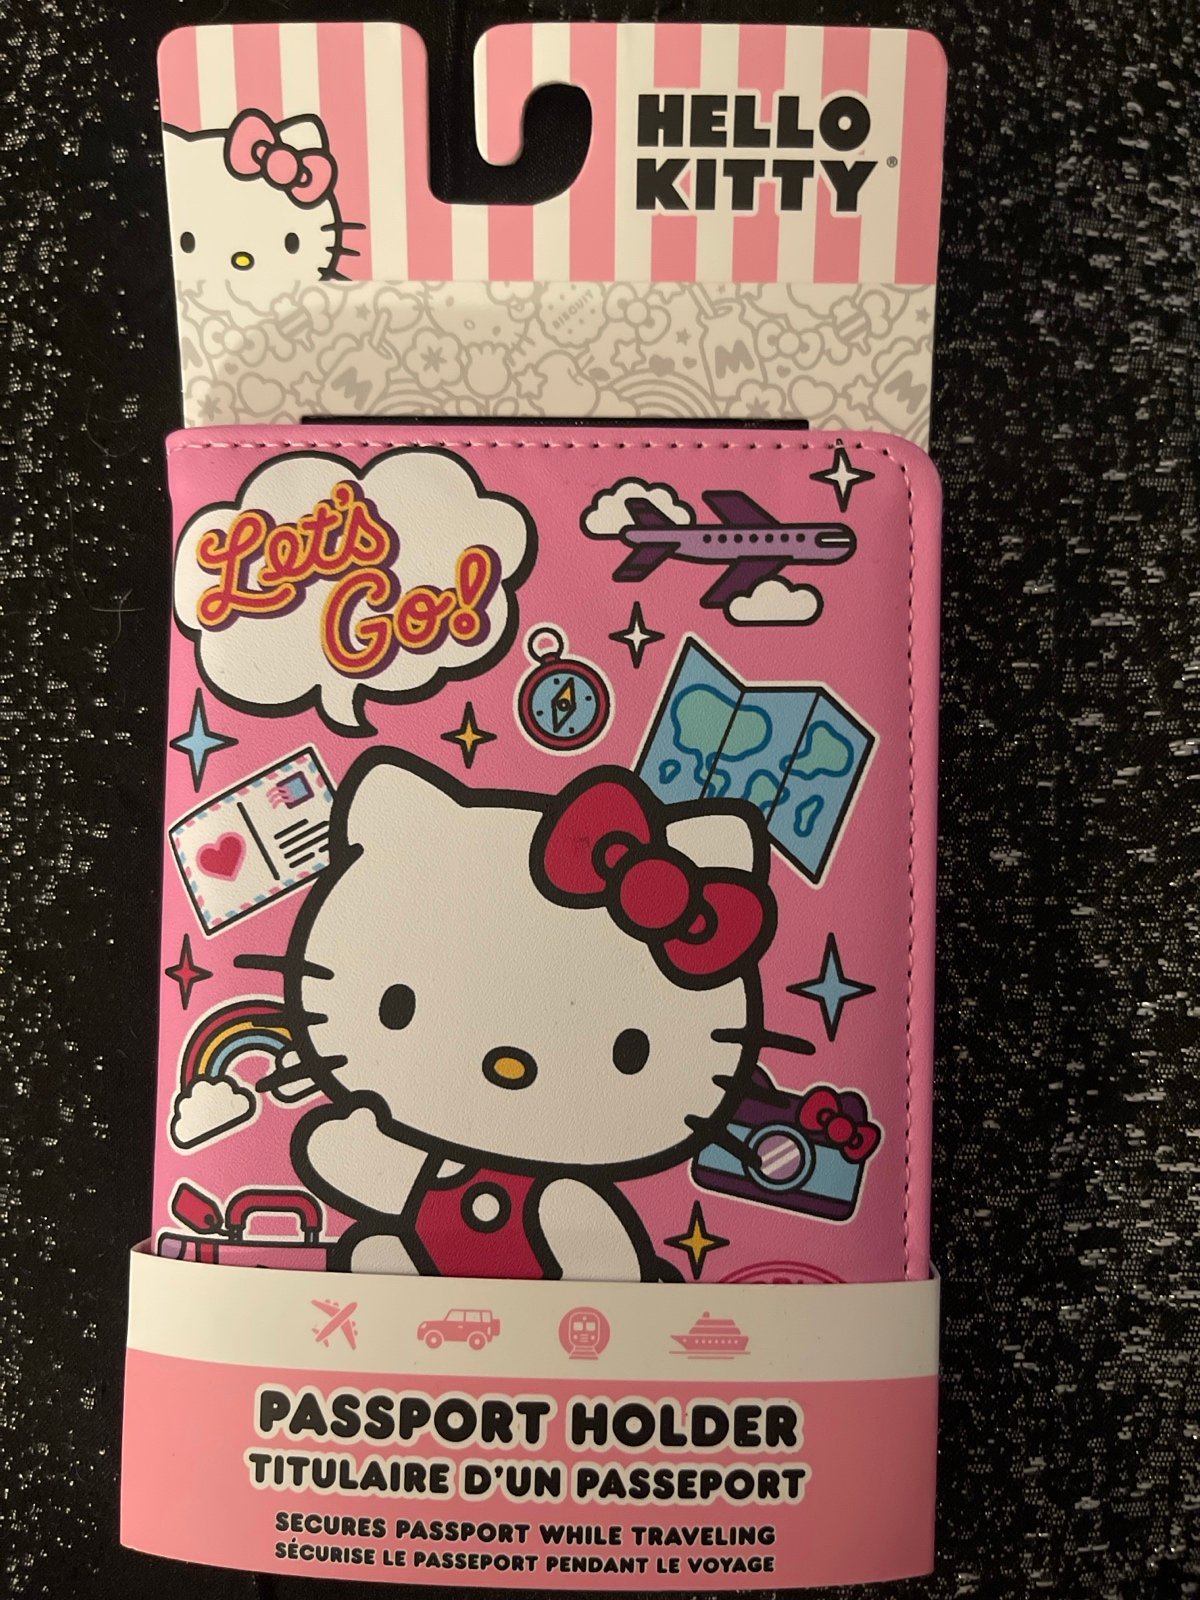 Hello Kitty passport holder awN0q5nFV